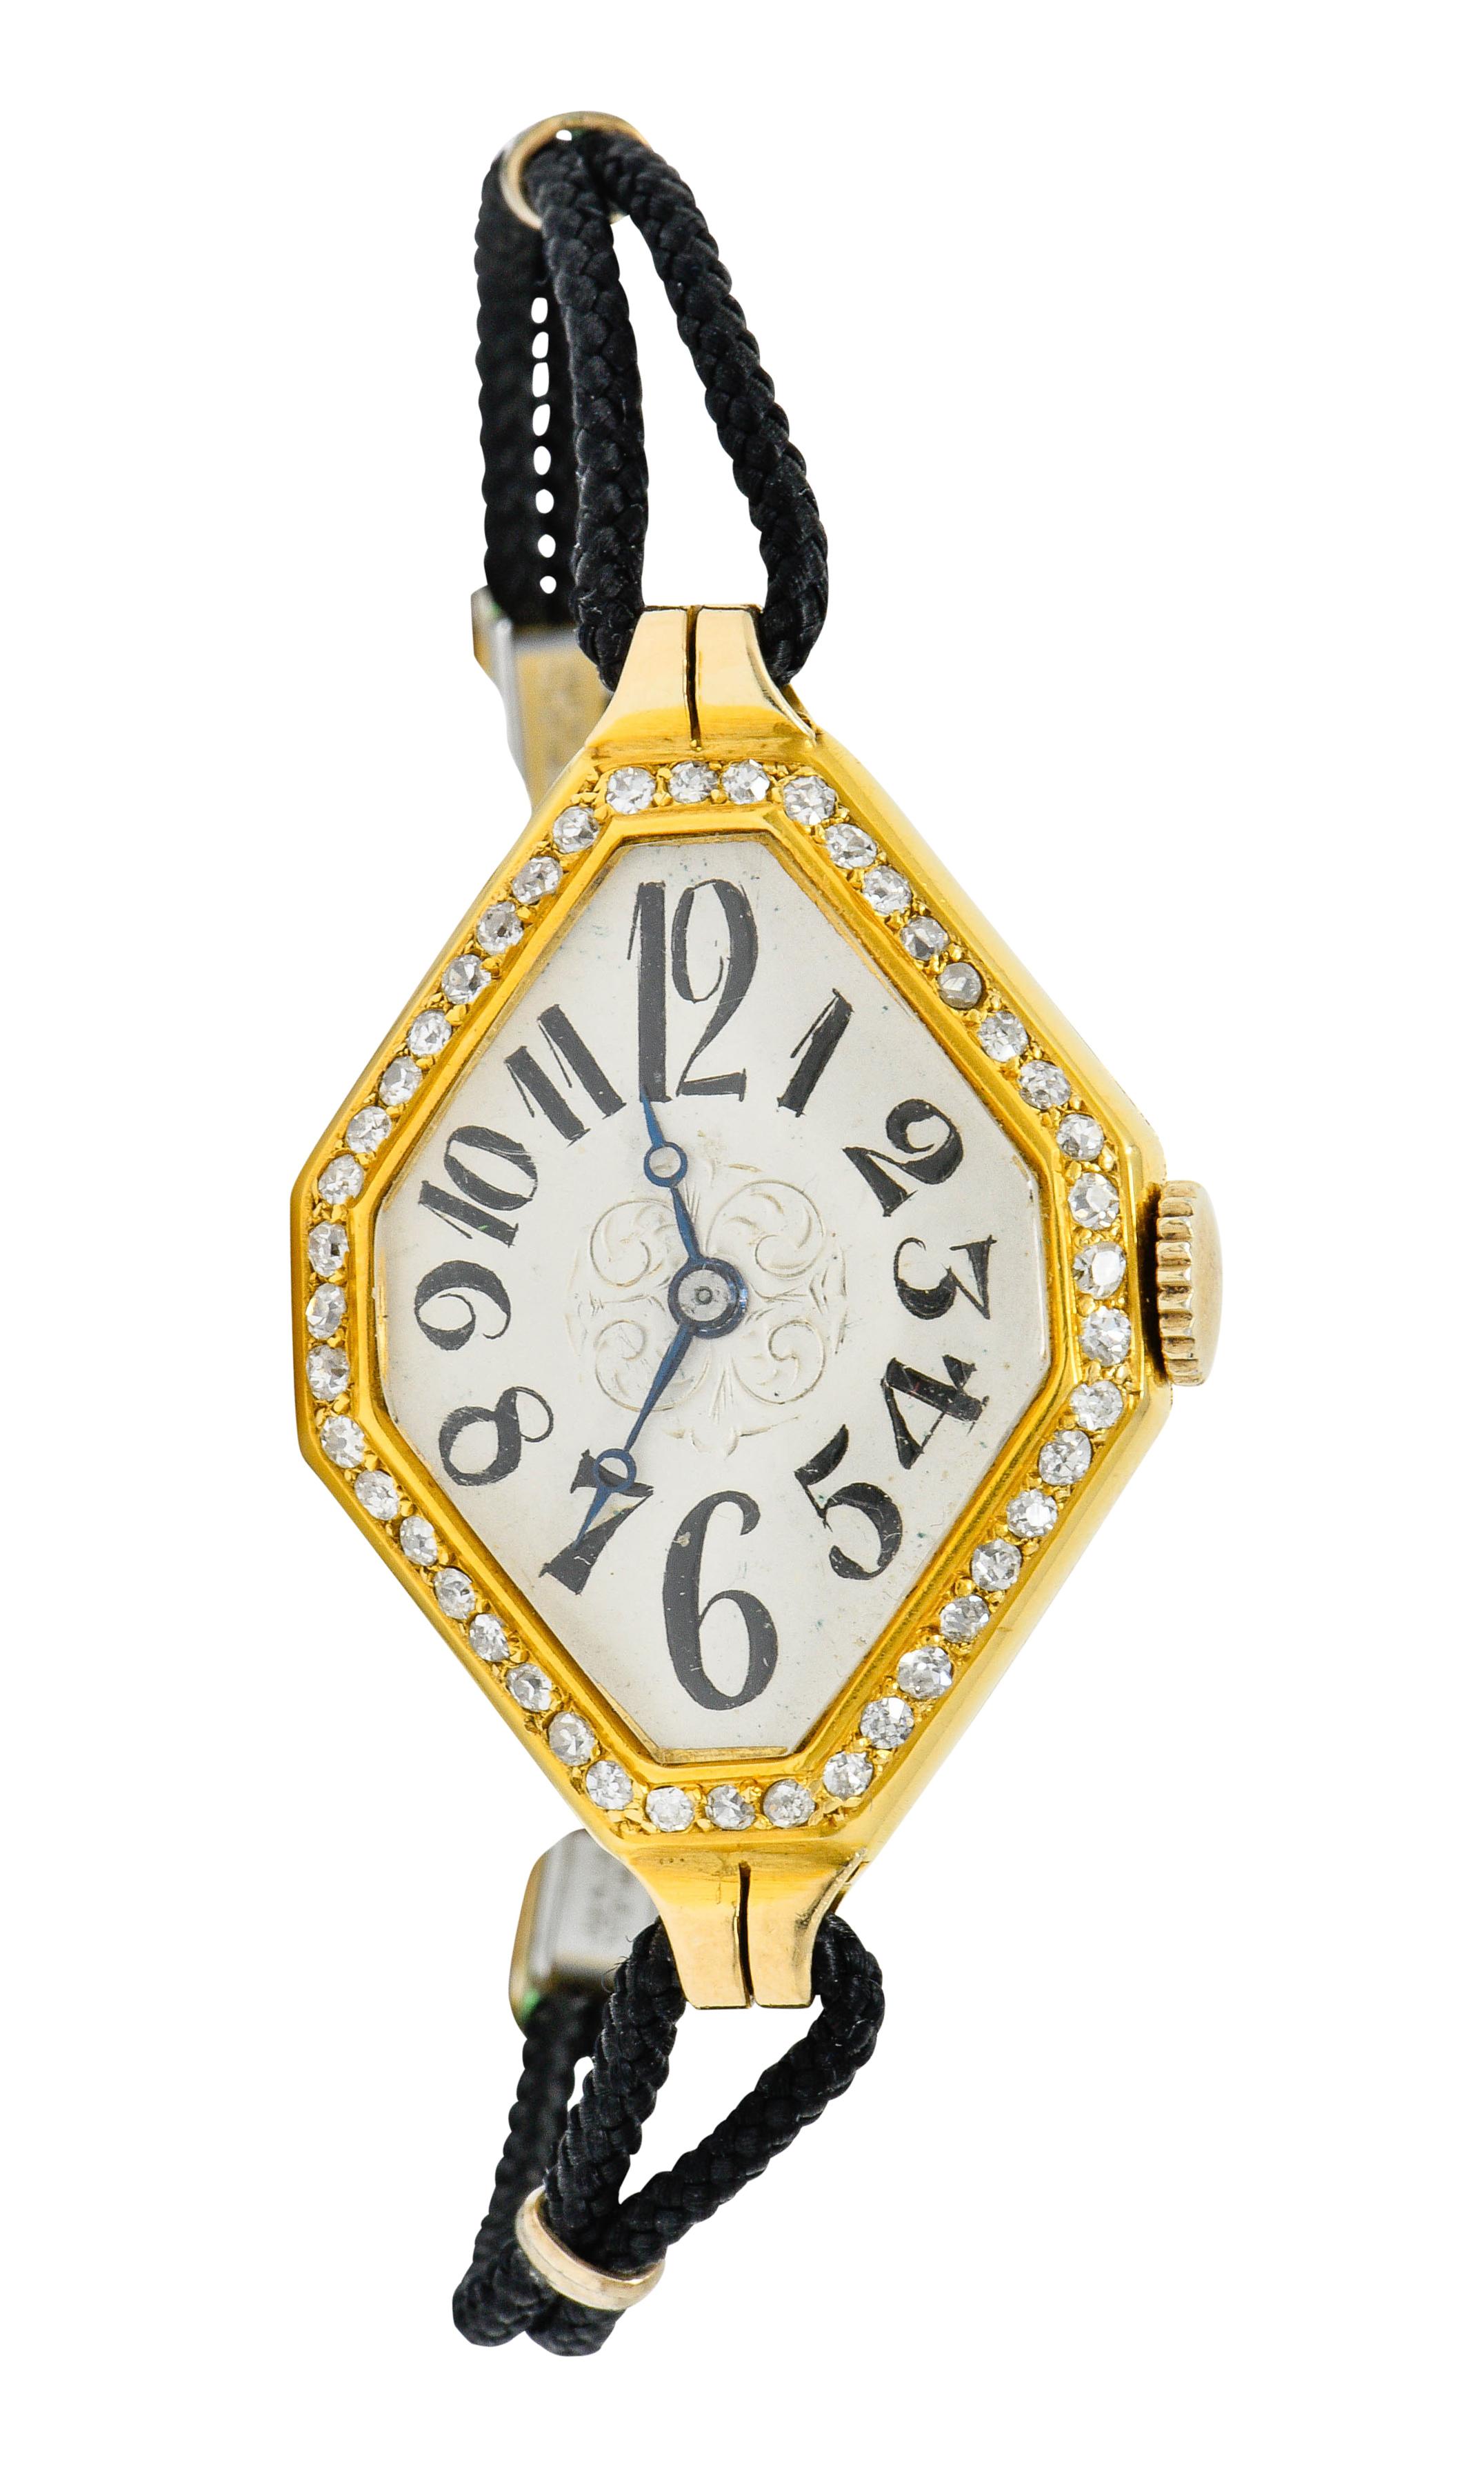 Gemex Art Deco 1.00 Carat Diamond 18 Karat Gold Antique Watch Bracelet 5